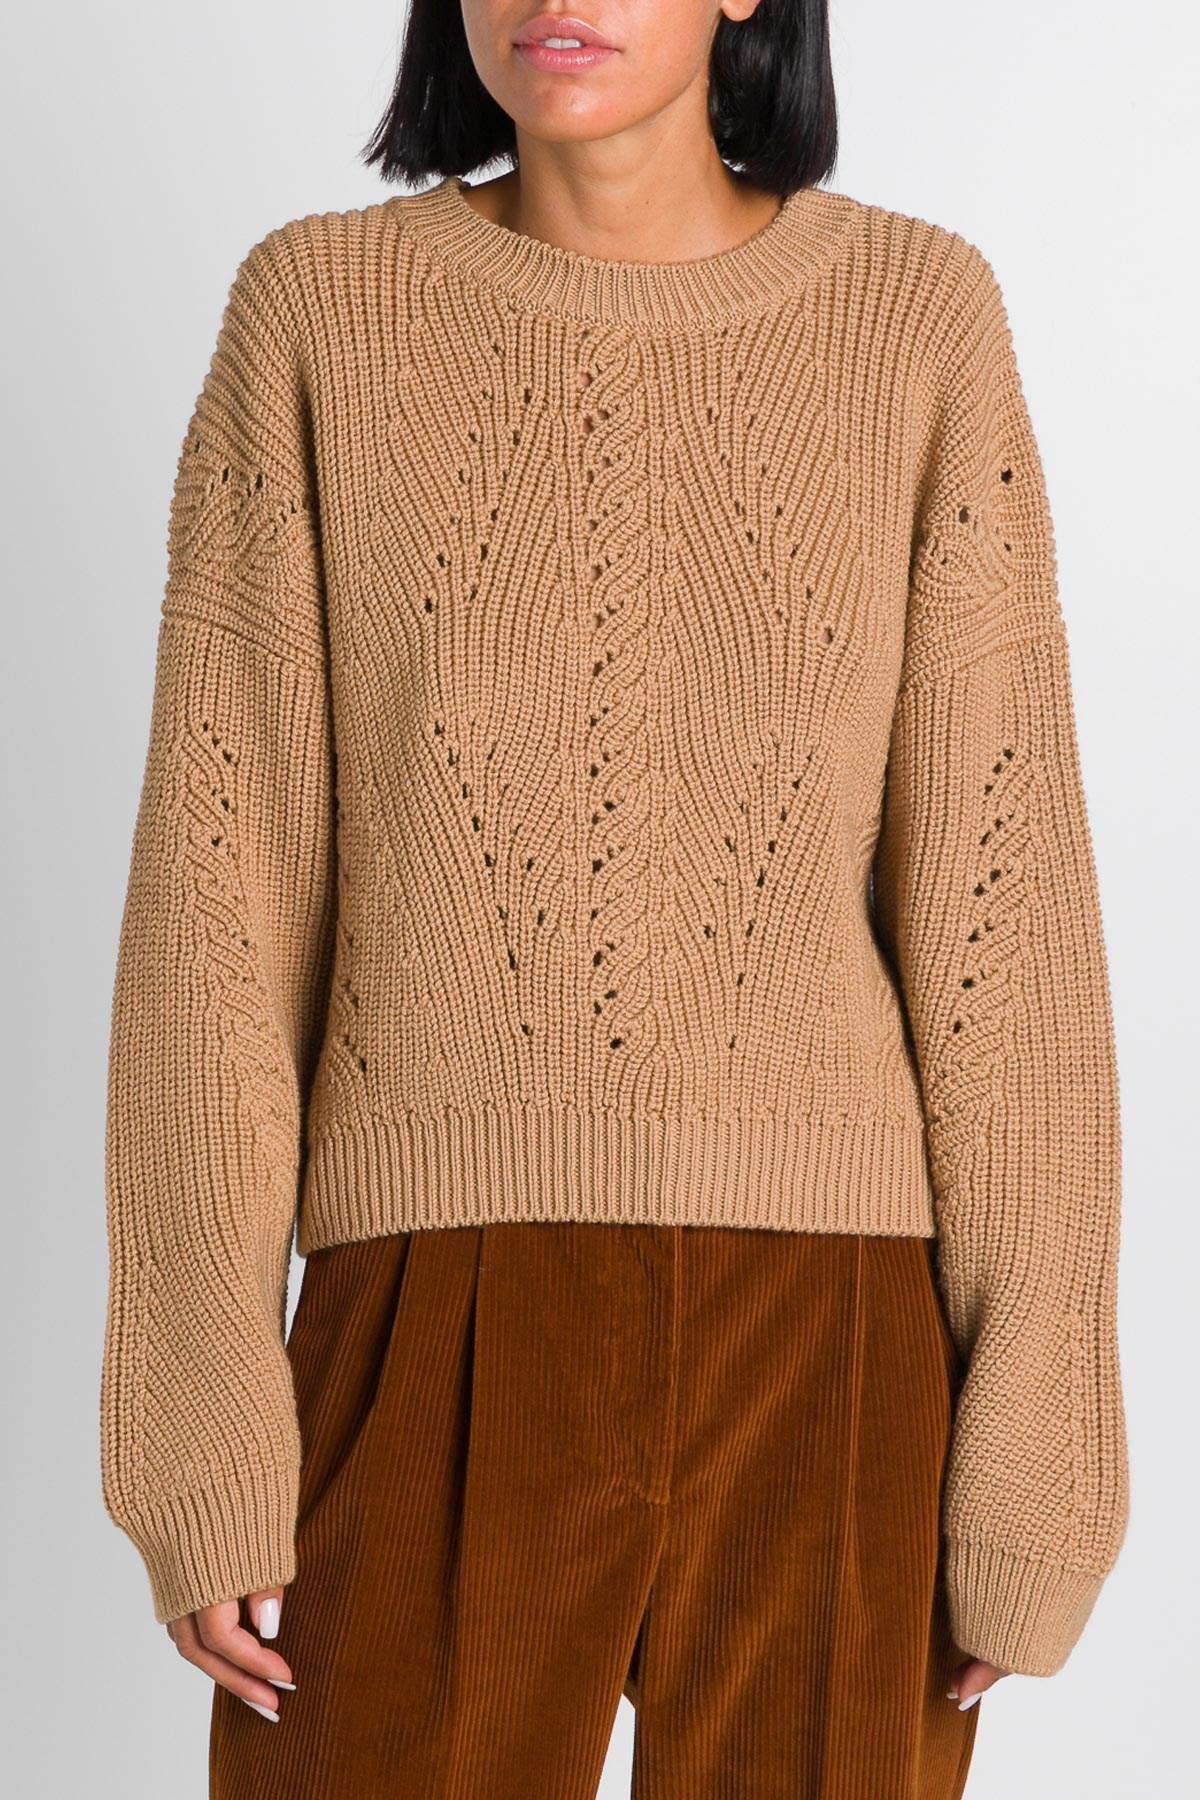 Alberta Ferretti Wool Cropped Sweater in Brown - Lyst